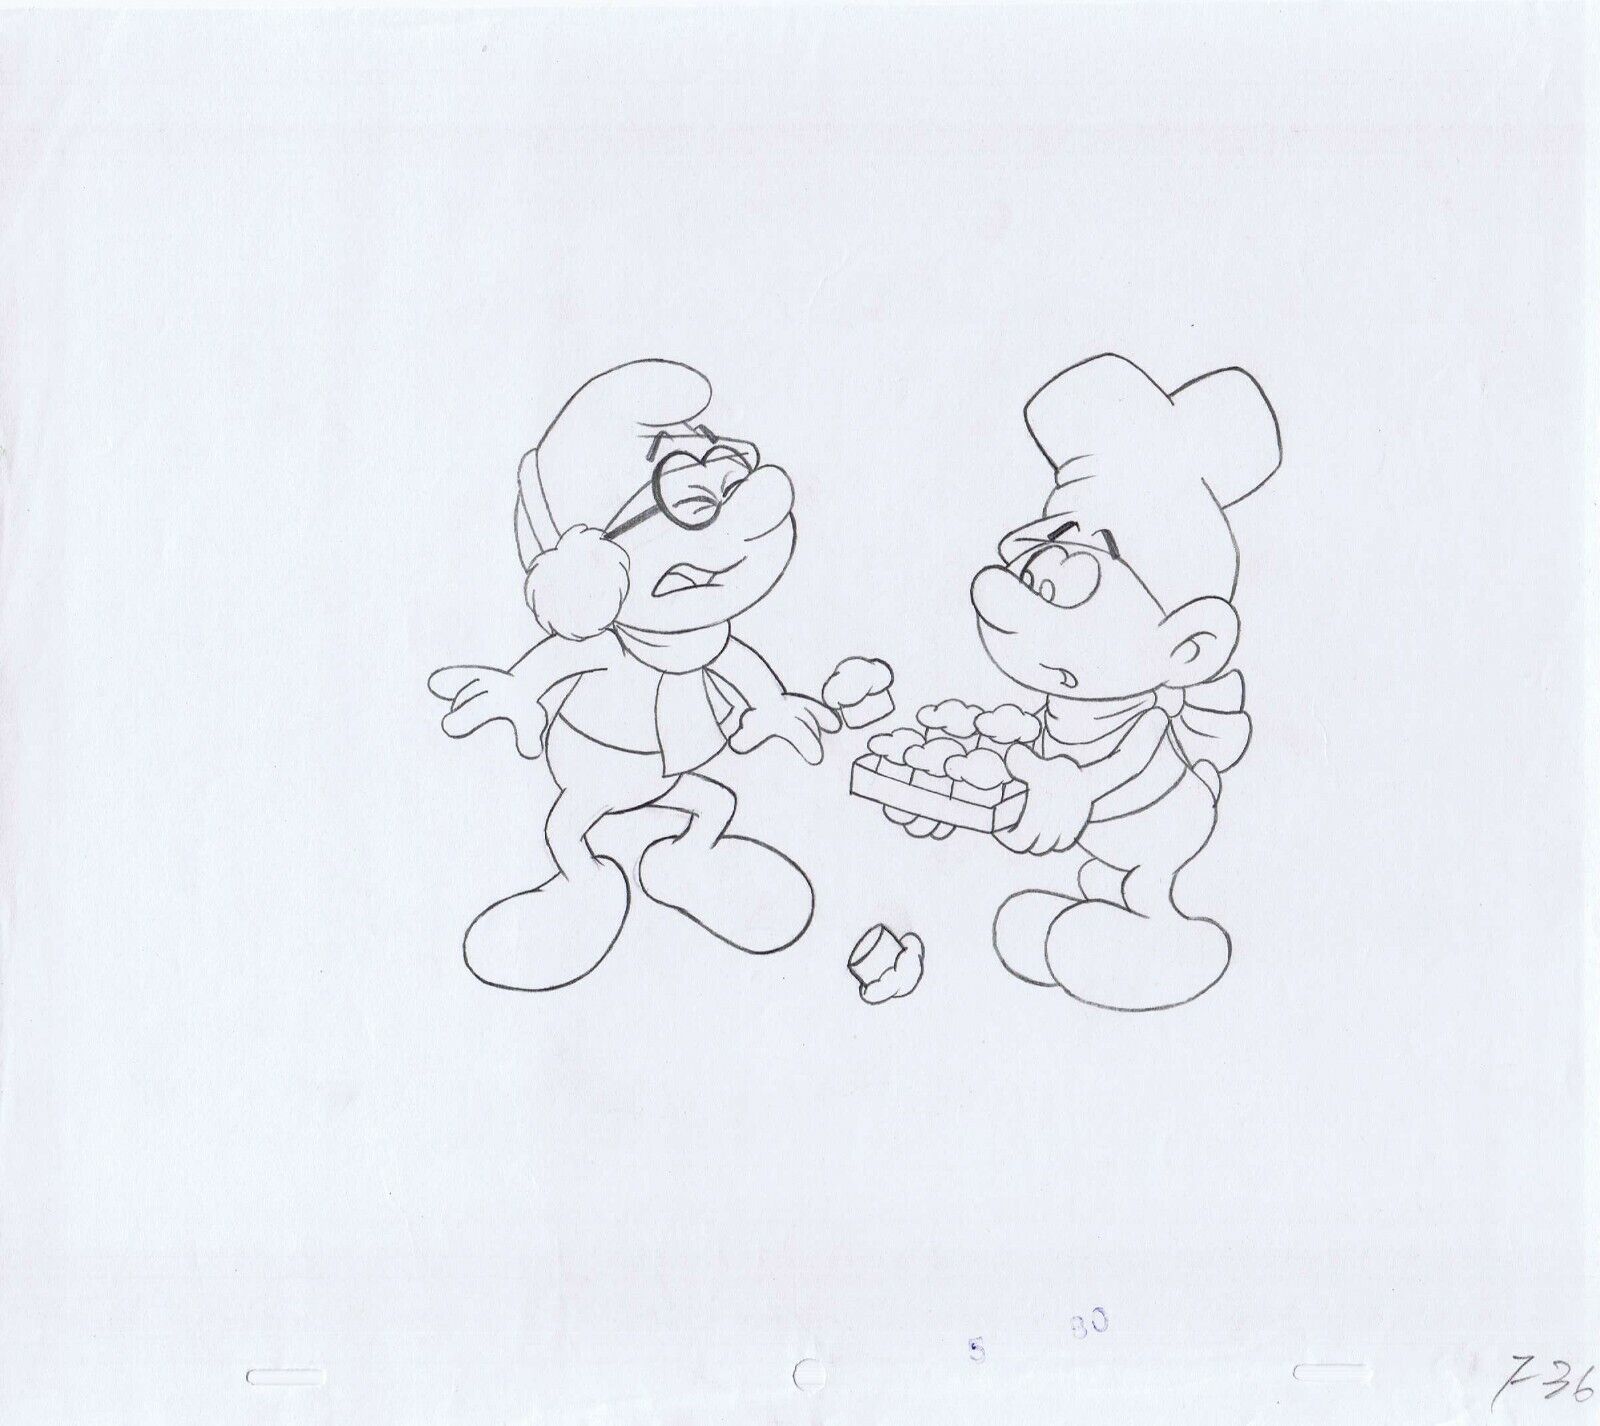 Smurfs 2 Images Original Art Animation Production Art 5 80 7-36